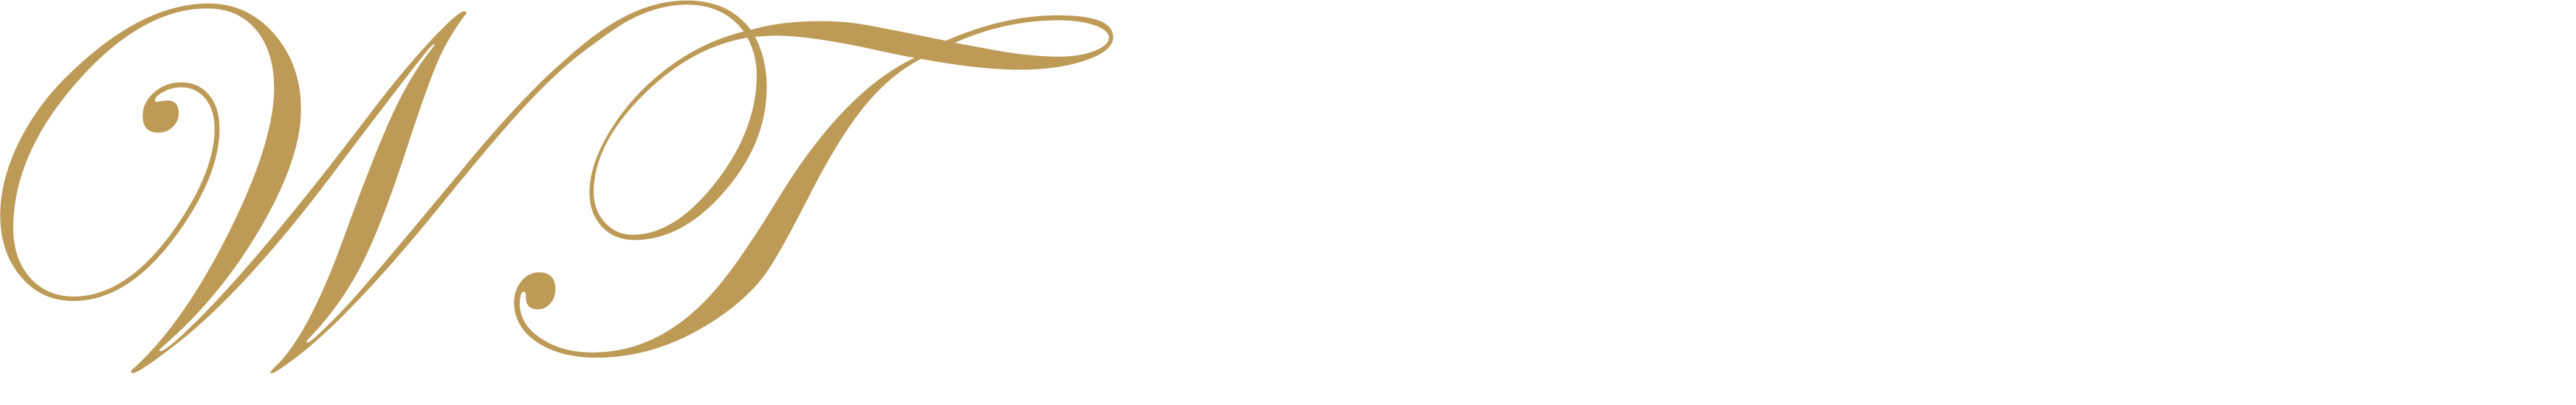 Wills & Trusts Wealth Management